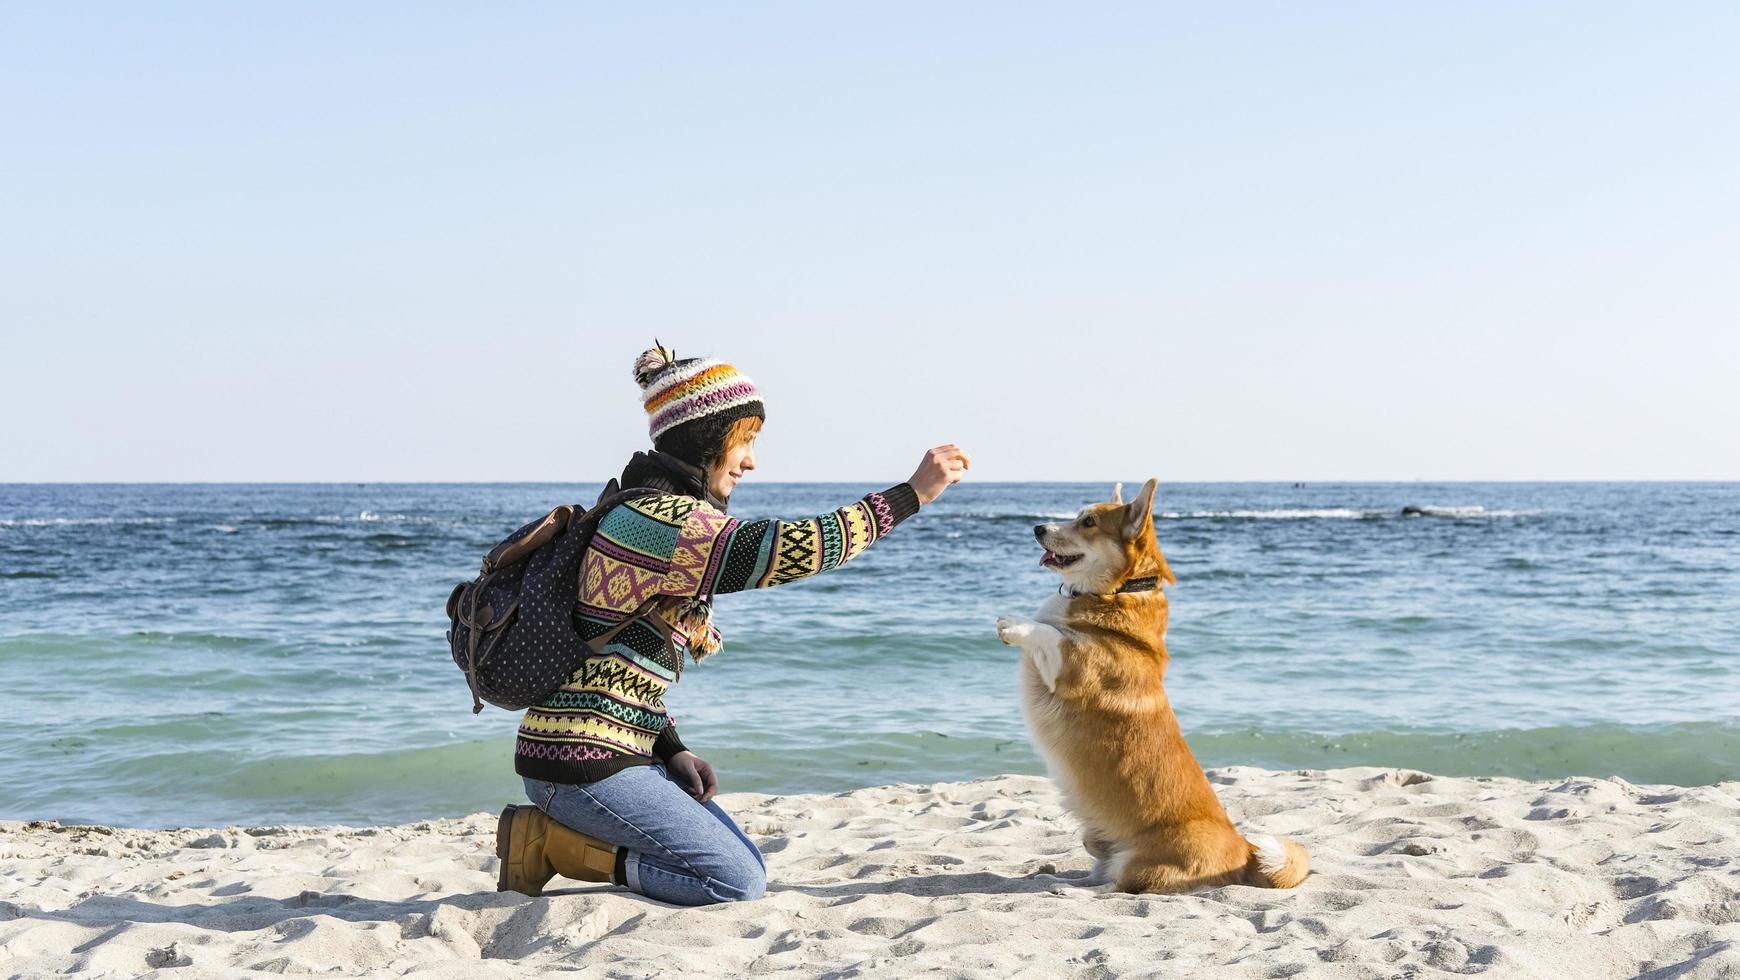 Young happy female walk with cute corgi dog on the autumn sunny beach photo